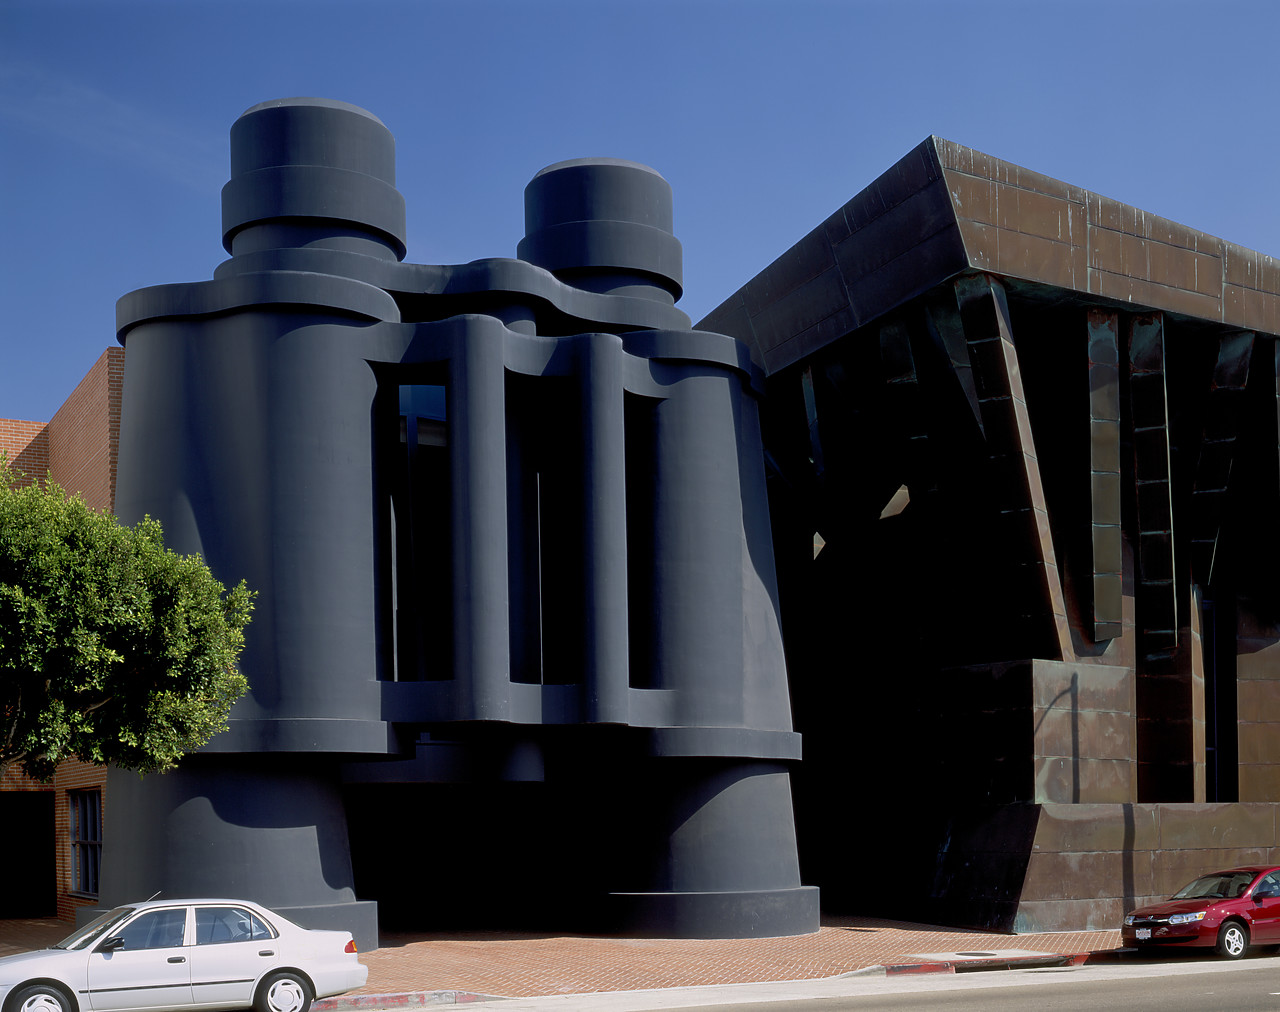 #040041-1 - Chait Day Building (Architect: Frank Gehry) Venice, California, USA